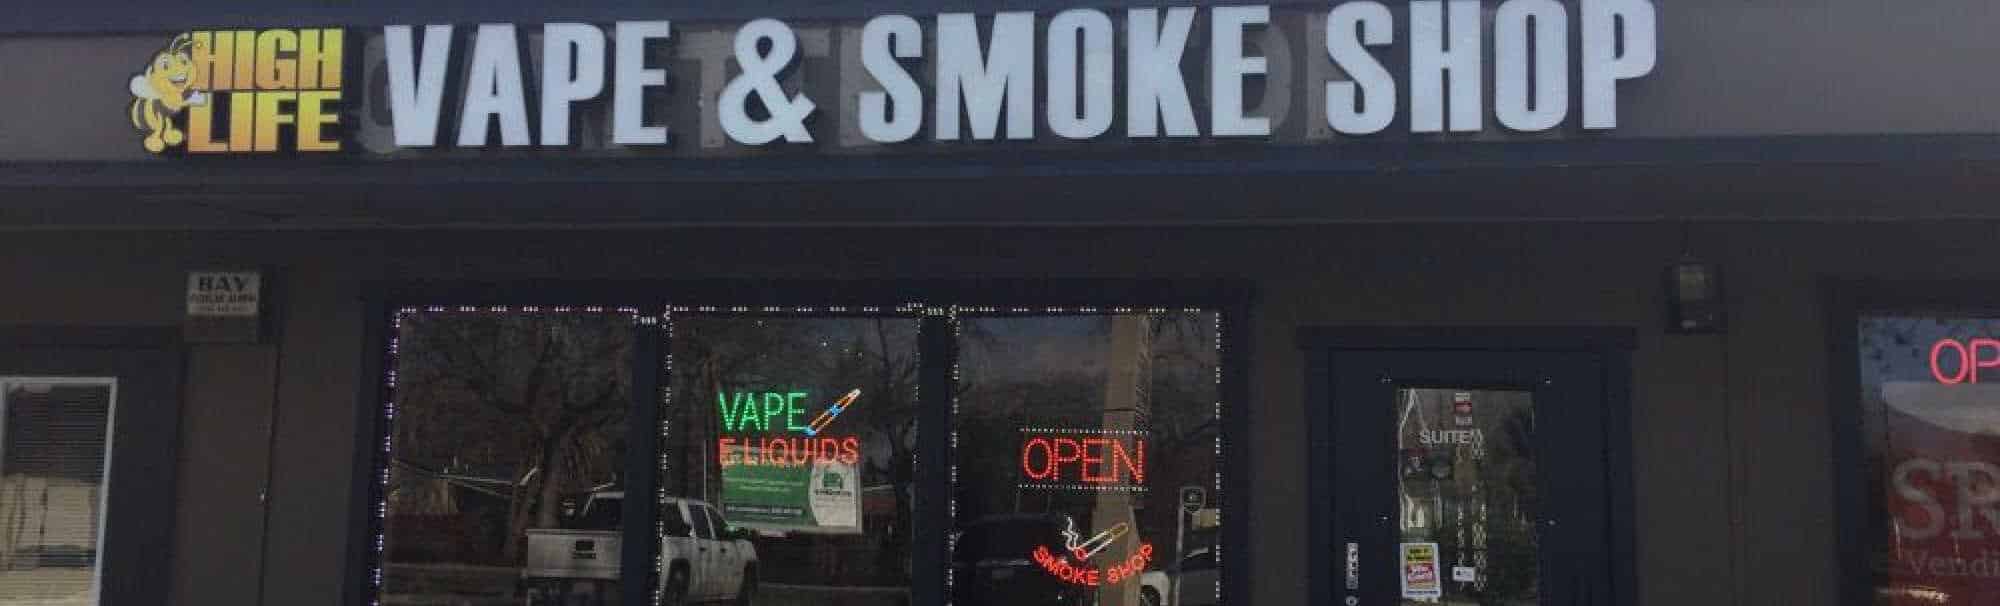 image of highlife vape & smoke shop in davis ca